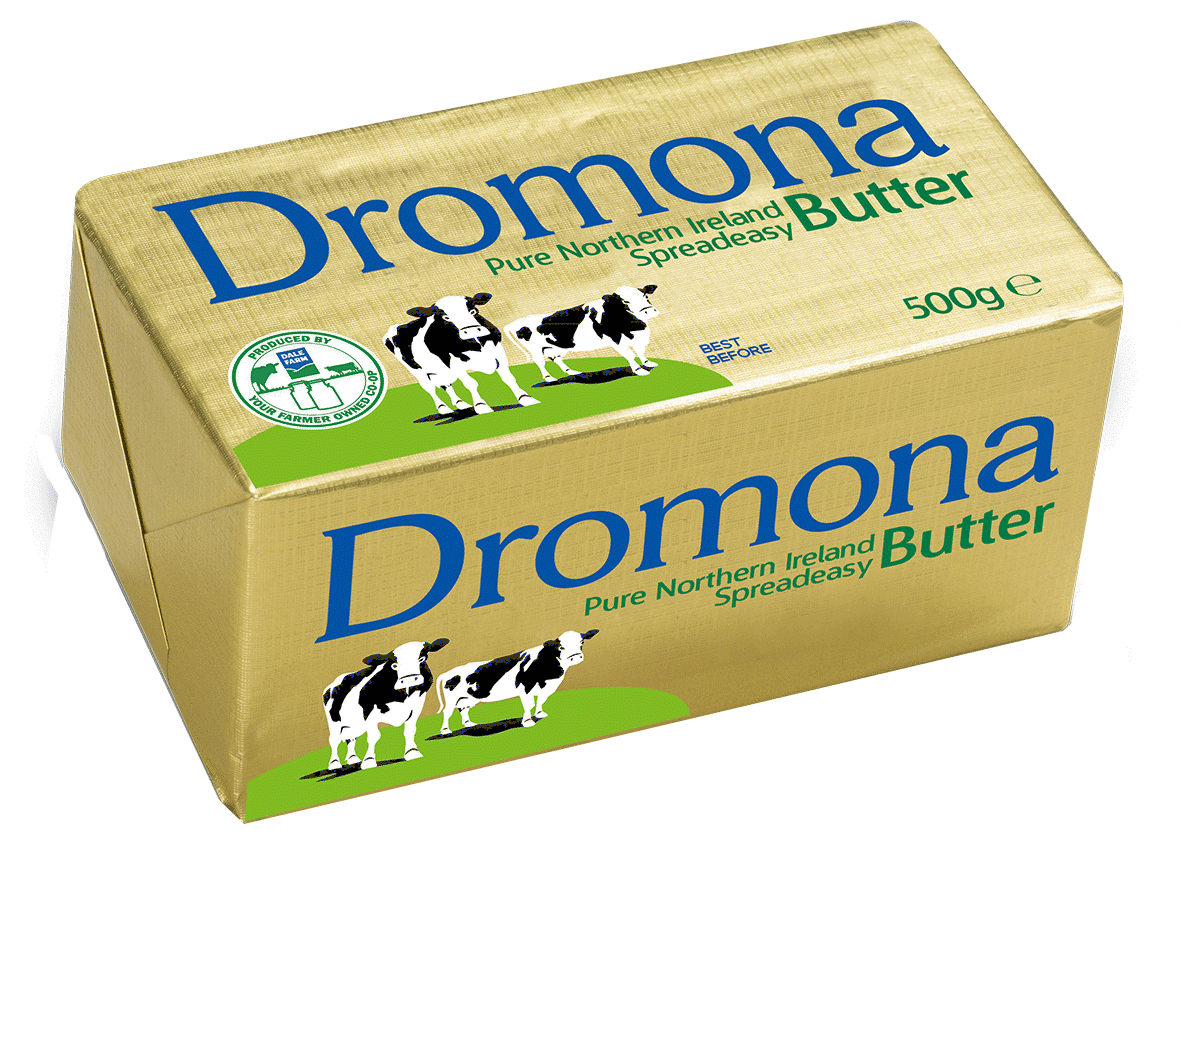 Dromona Spreadeasy Butter 500g